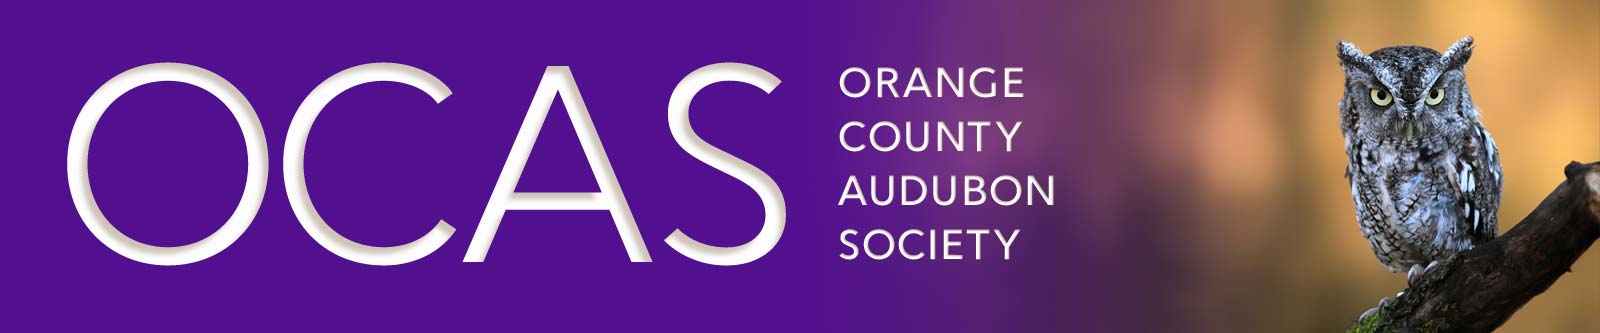 Orange County Audubon Society Banner